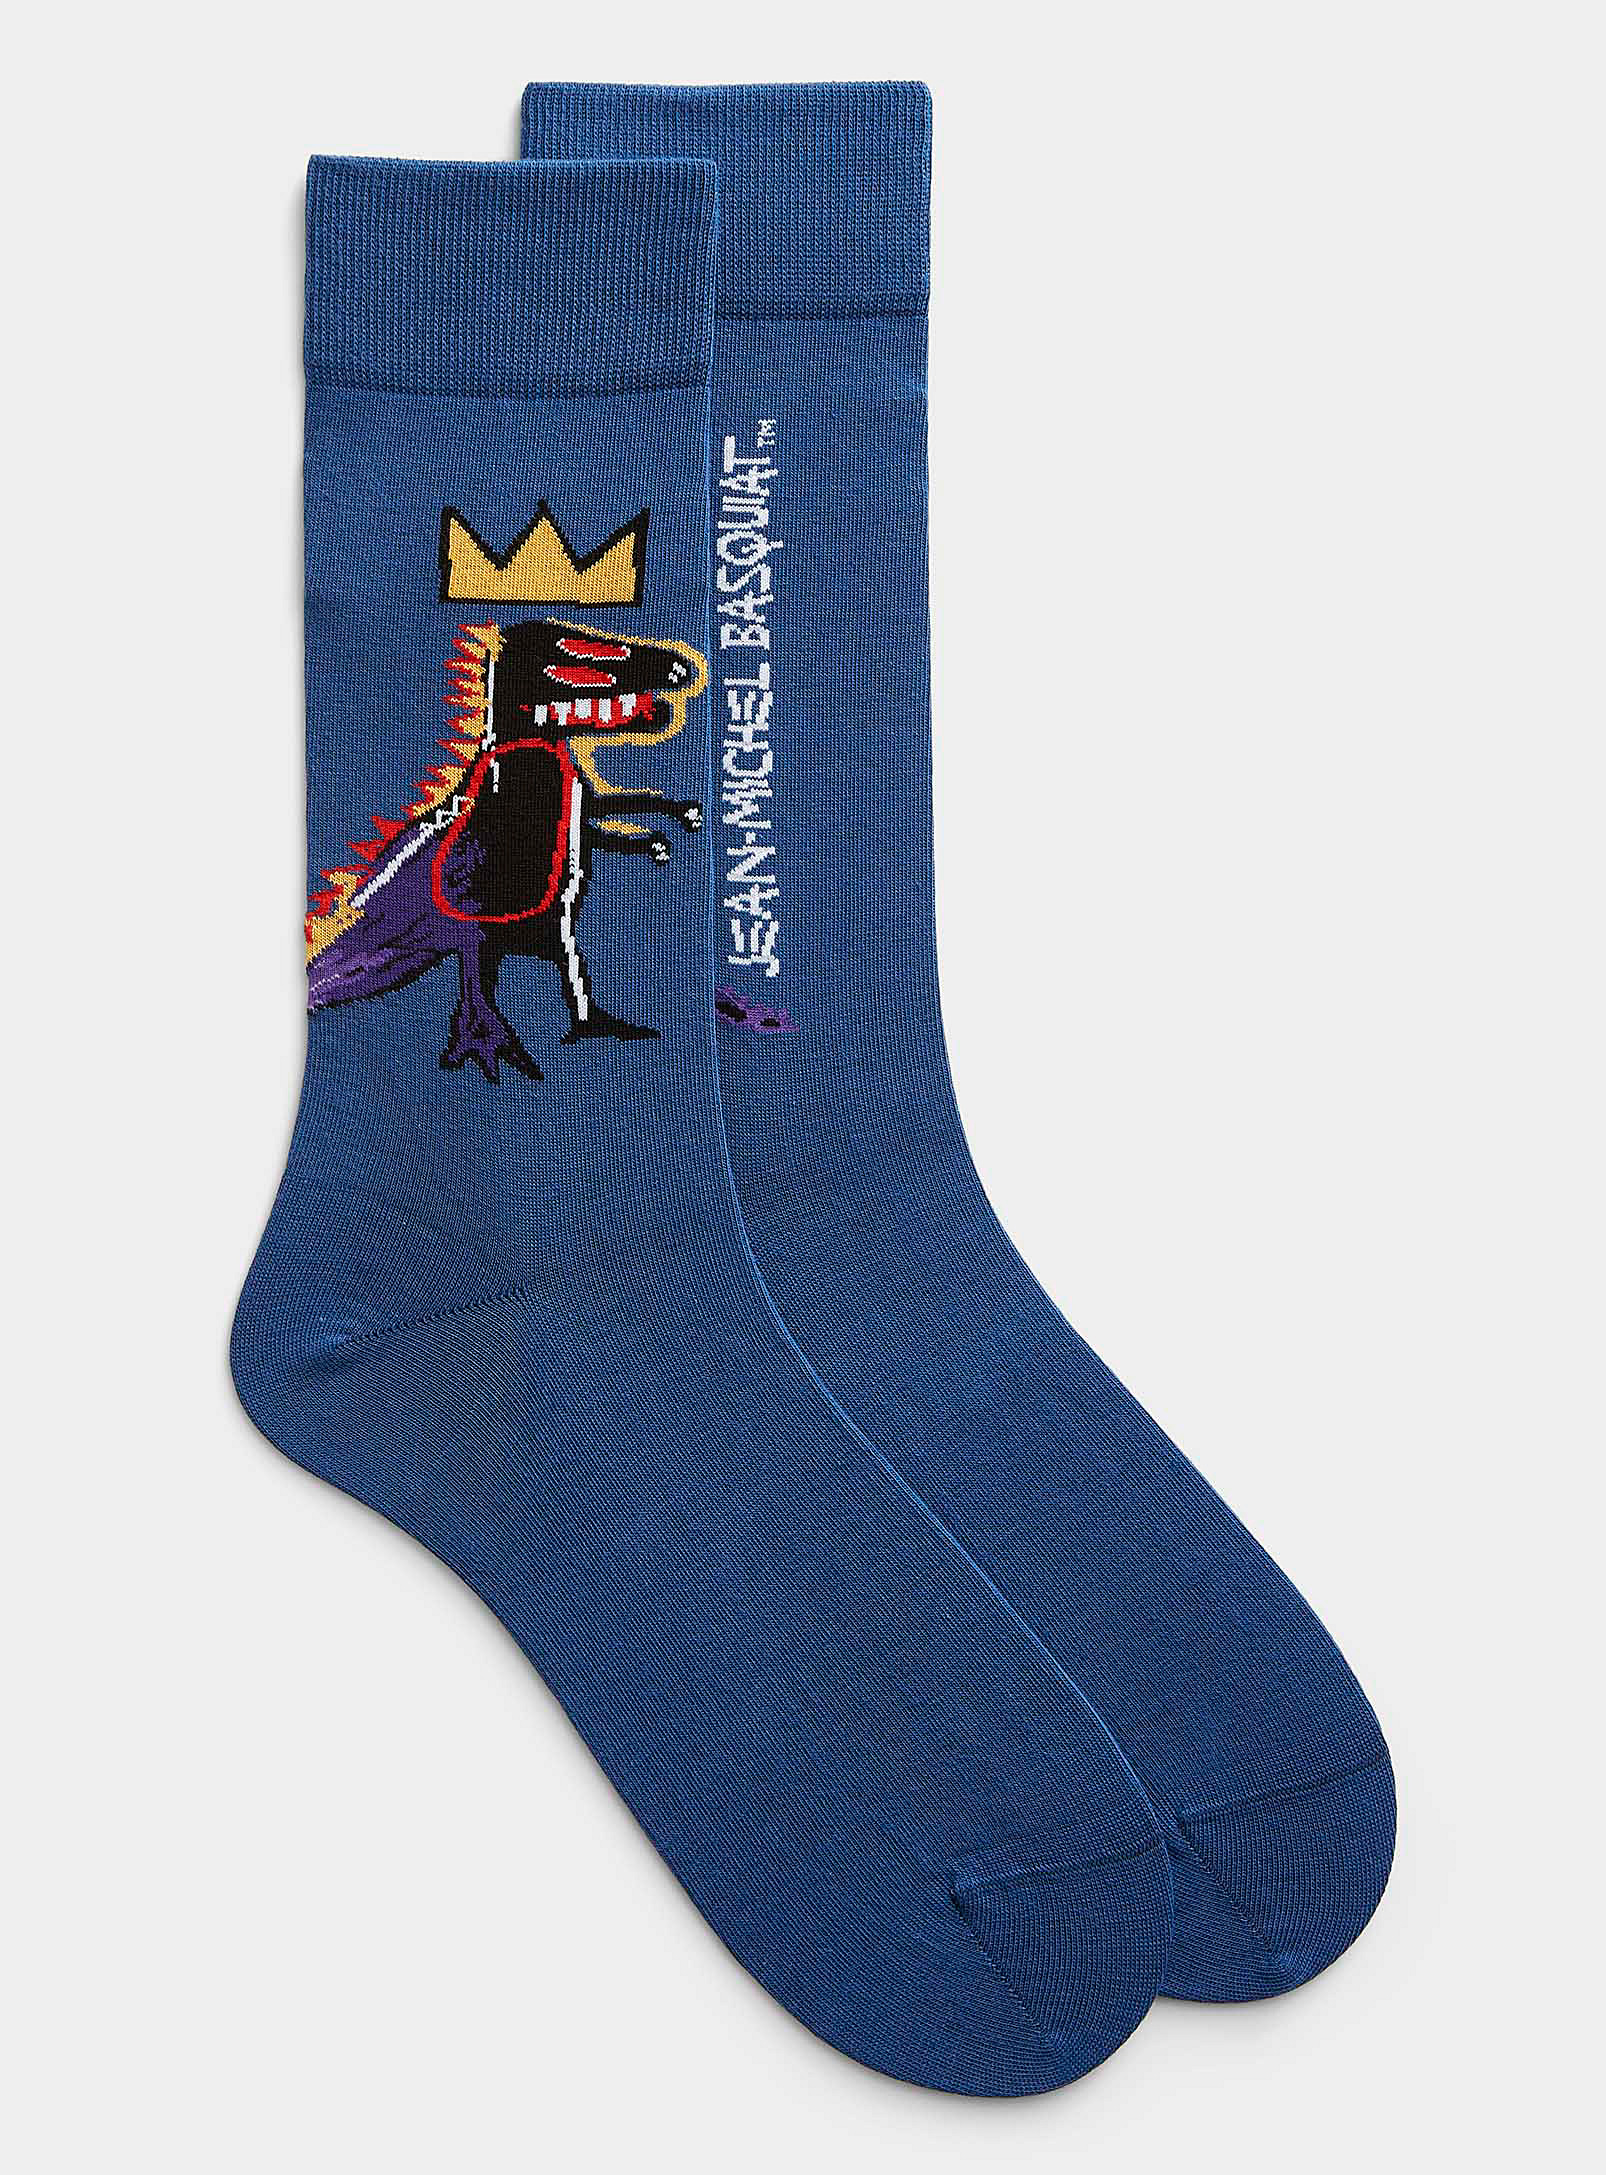 Jimmy Lion Basquiat Pez Dispenser Socks In Blue